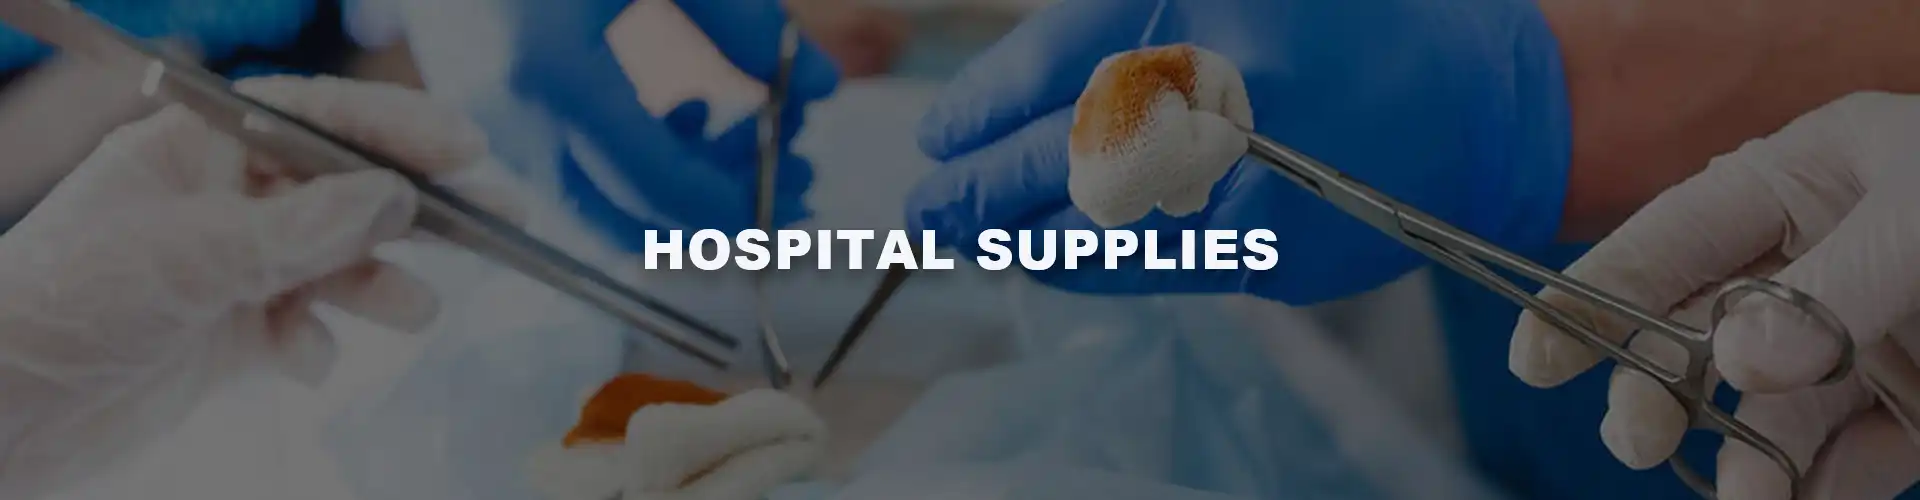 Hospital supplies